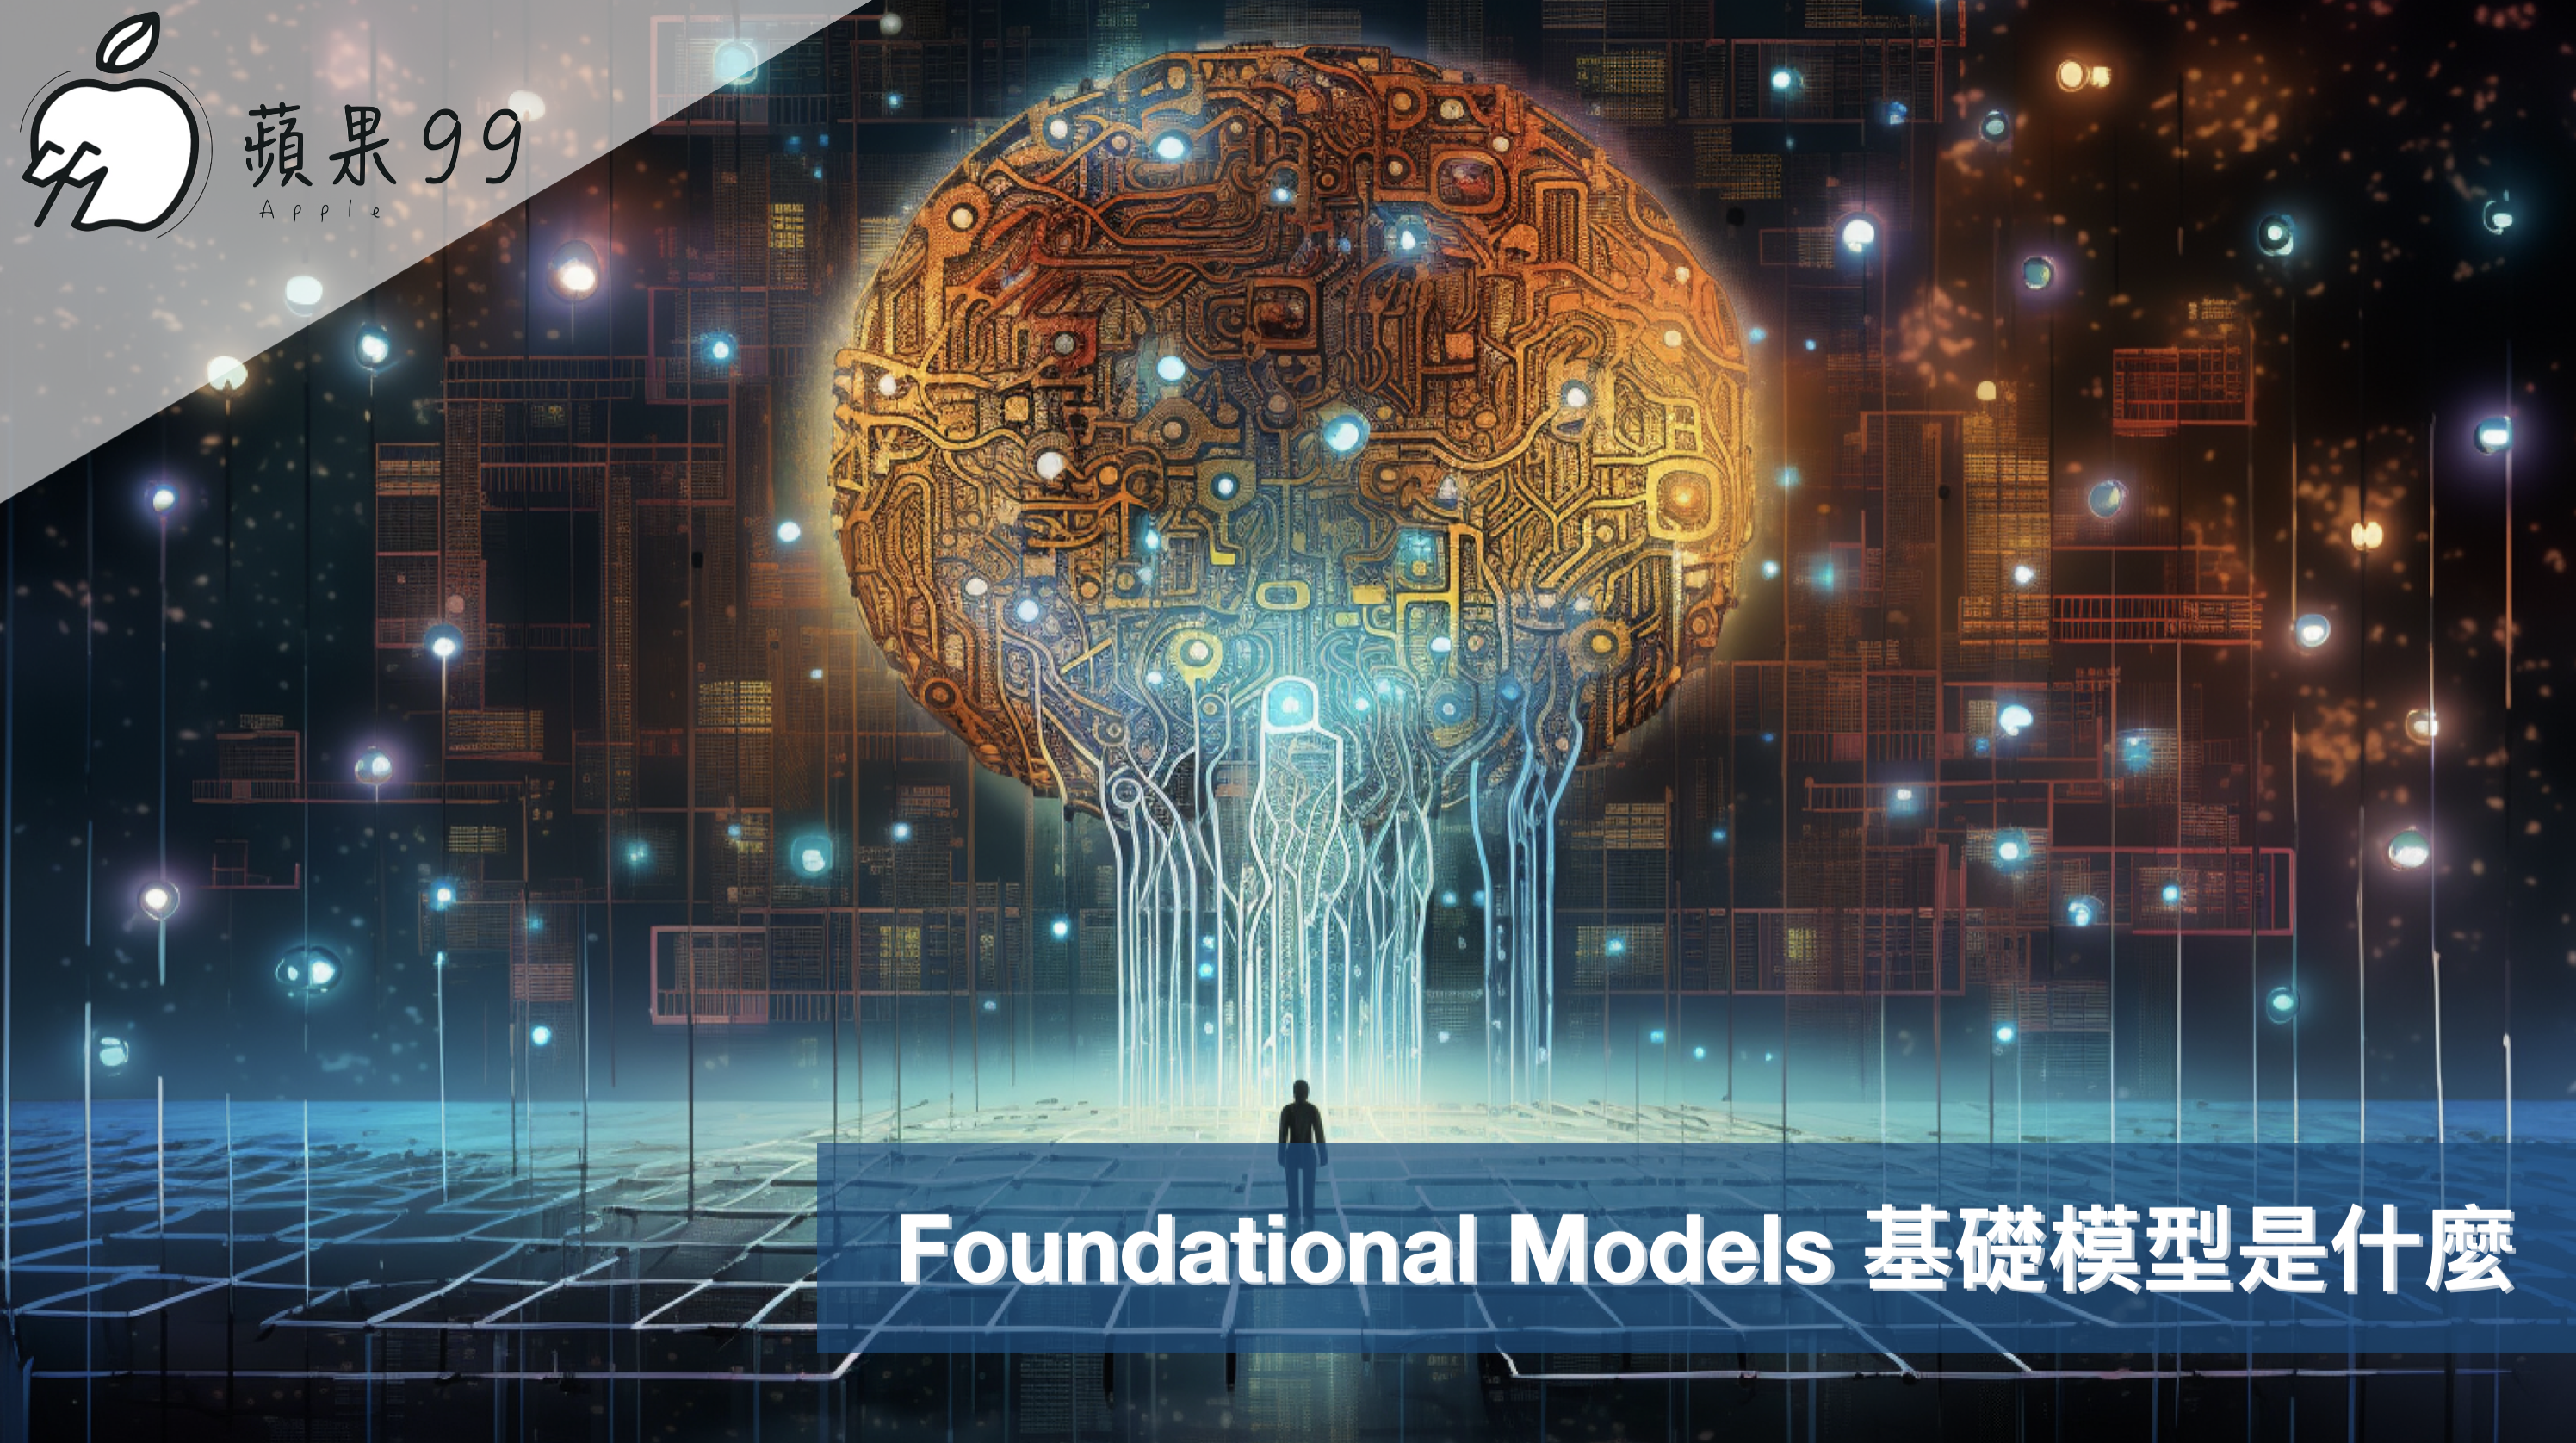 Foundational Models 基礎模型是什麼？